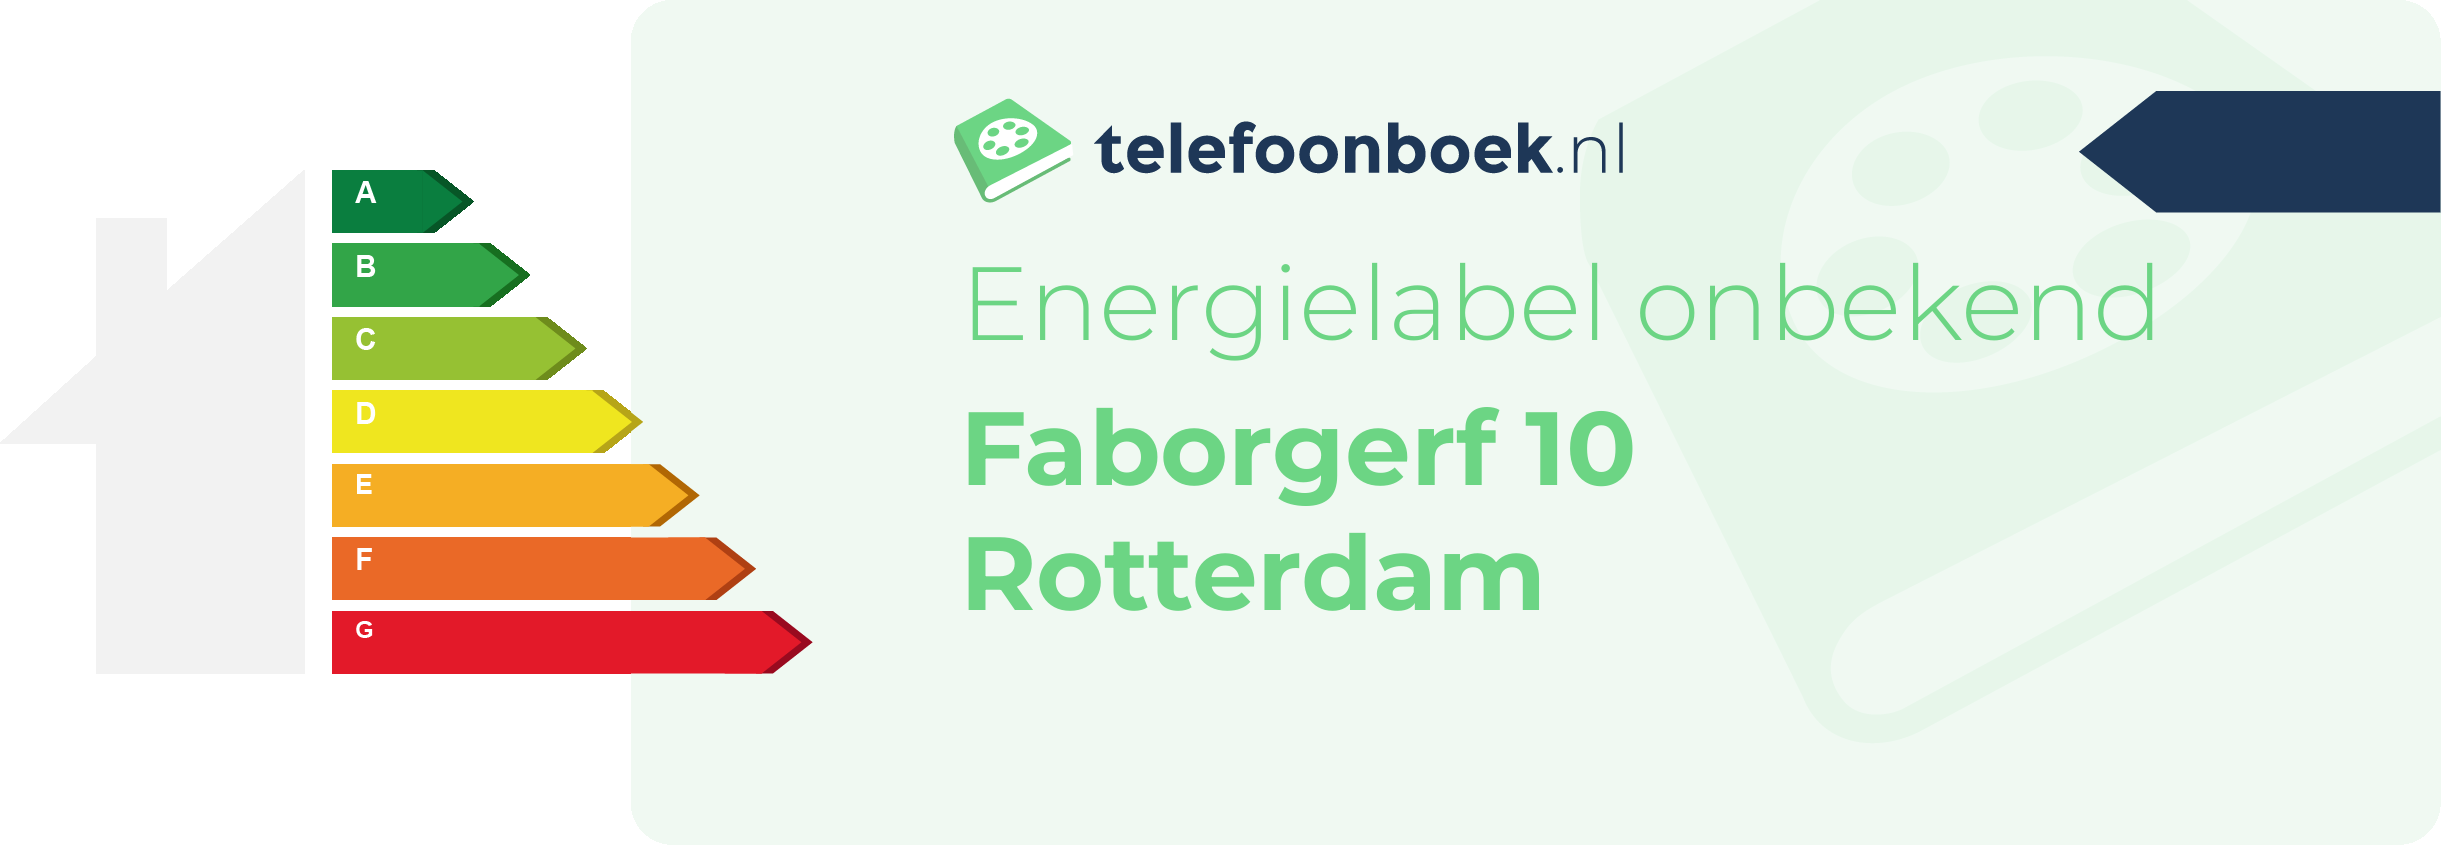 Energielabel Faborgerf 10 Rotterdam